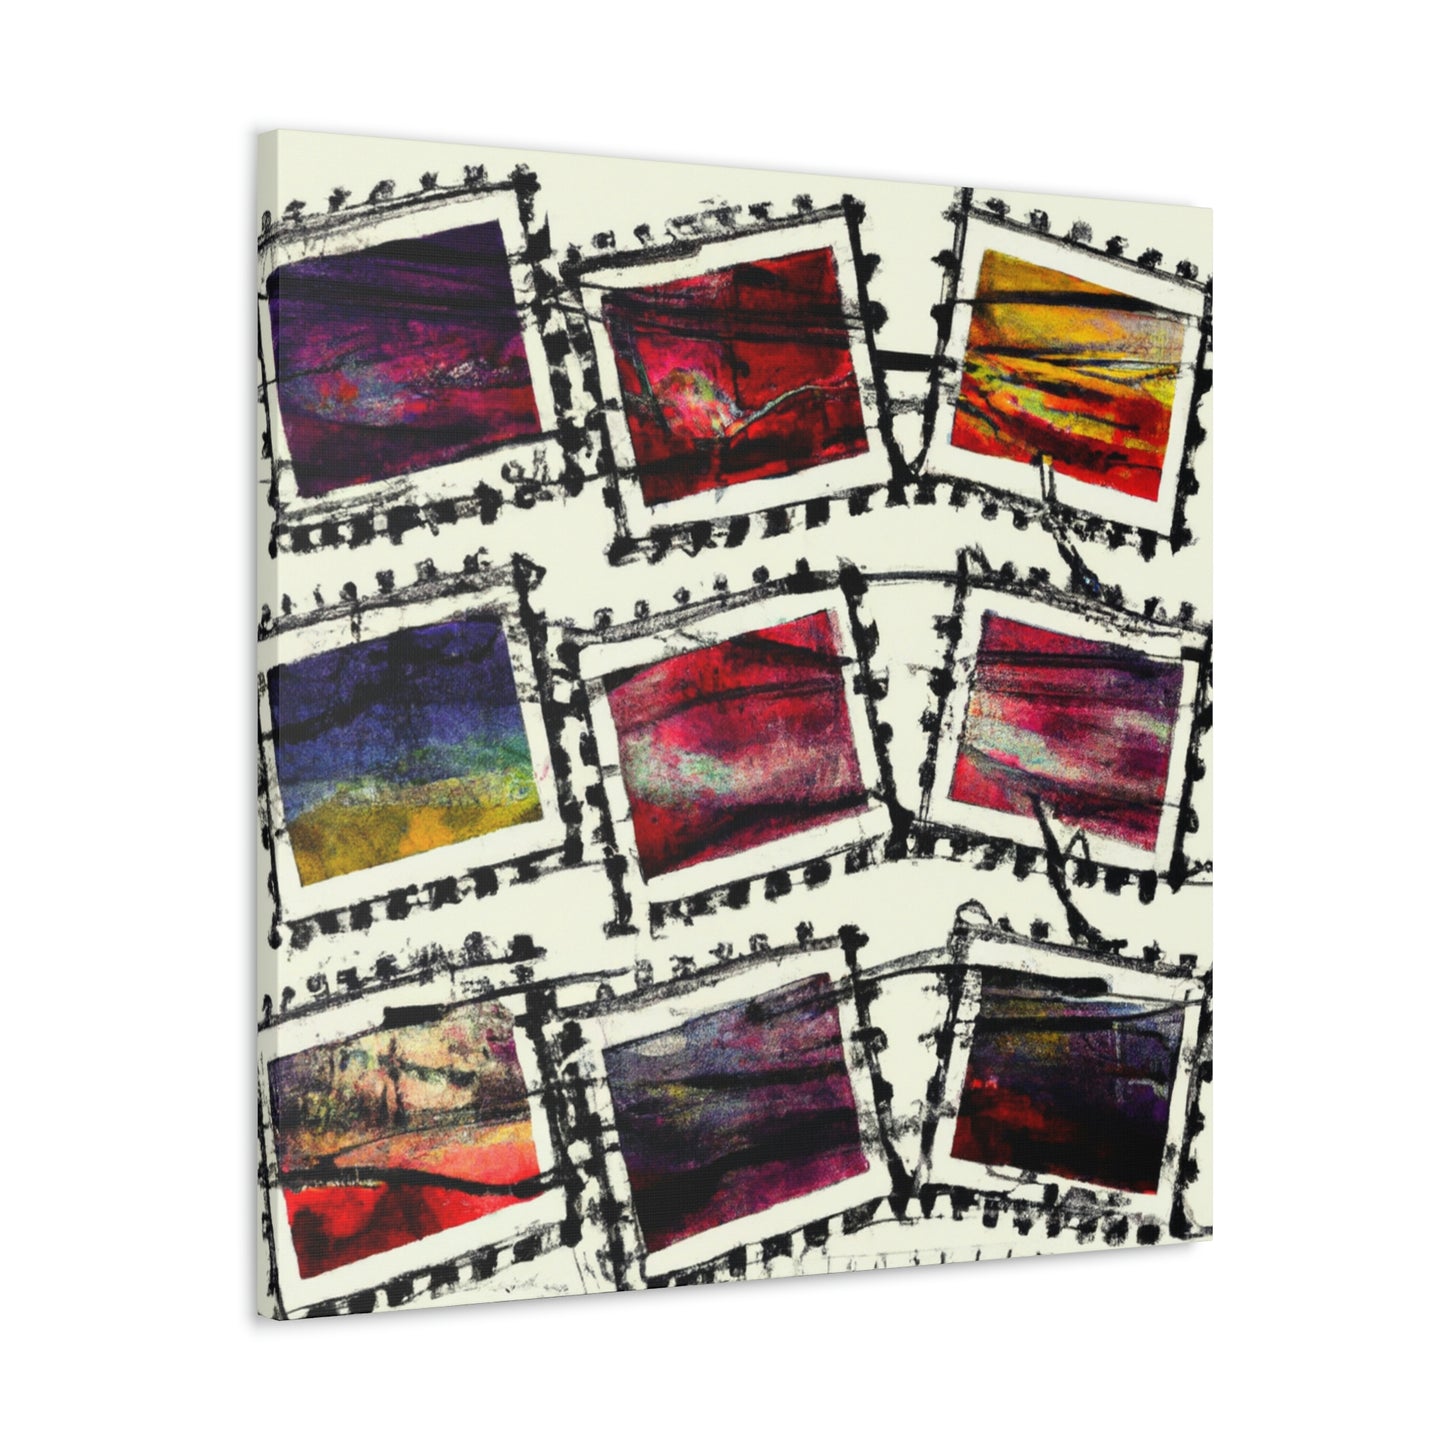 Global Postage Series - Canvas